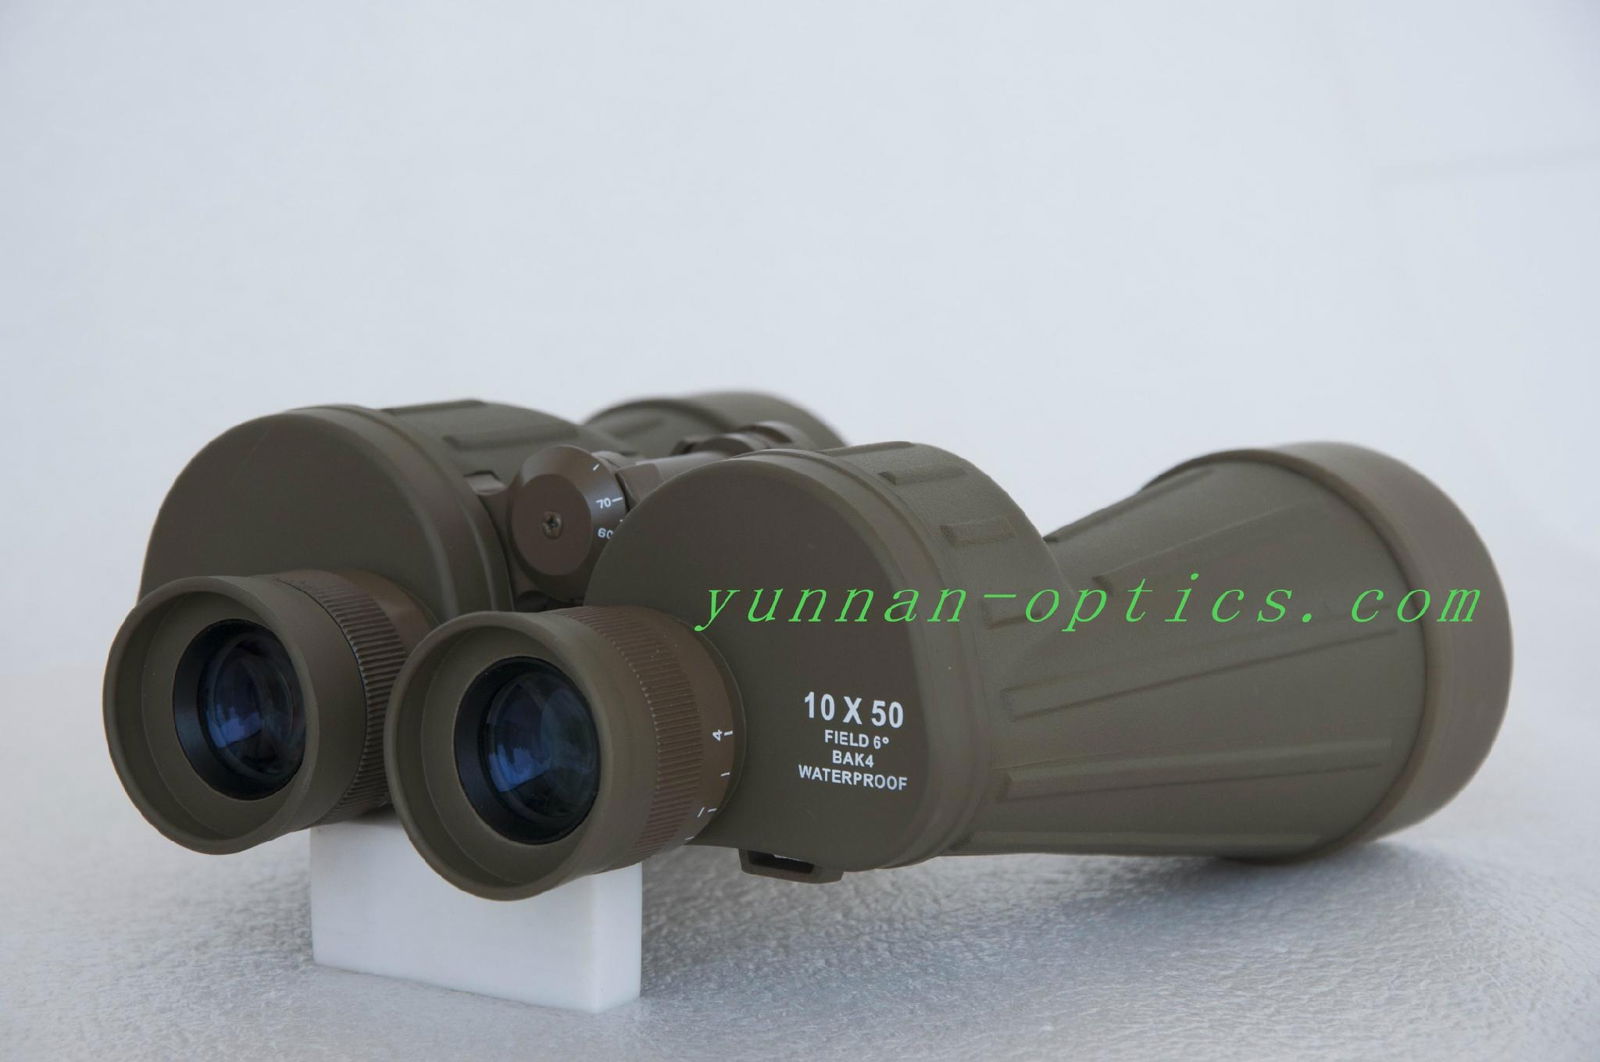  Military binocular 10x50,waterproof 